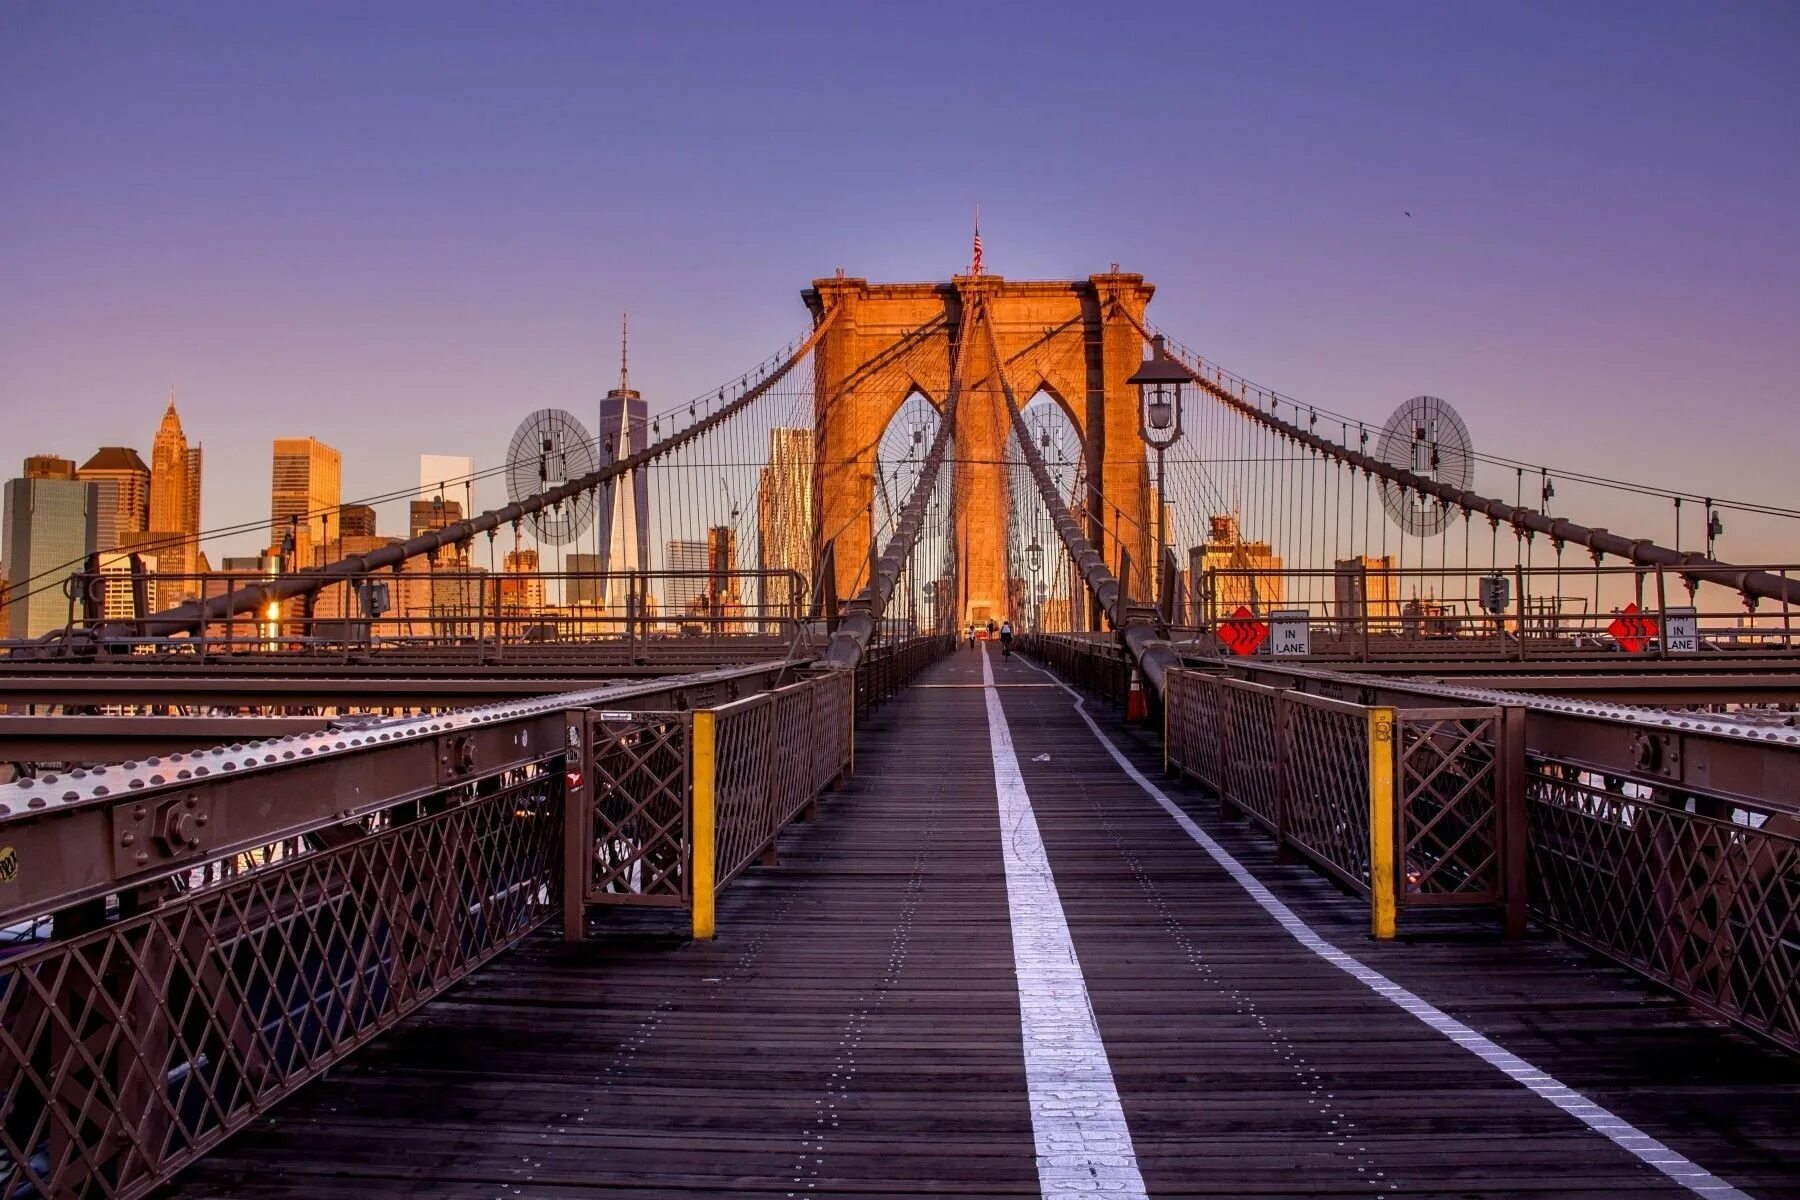 Бруклин мост. Бруклин мост Нью-Йорк. Висячий Бруклинский мост. Бруклинский мост мост в Нью-Йорке. “Манхэттен бридж”. Моста в Нью Йорке.